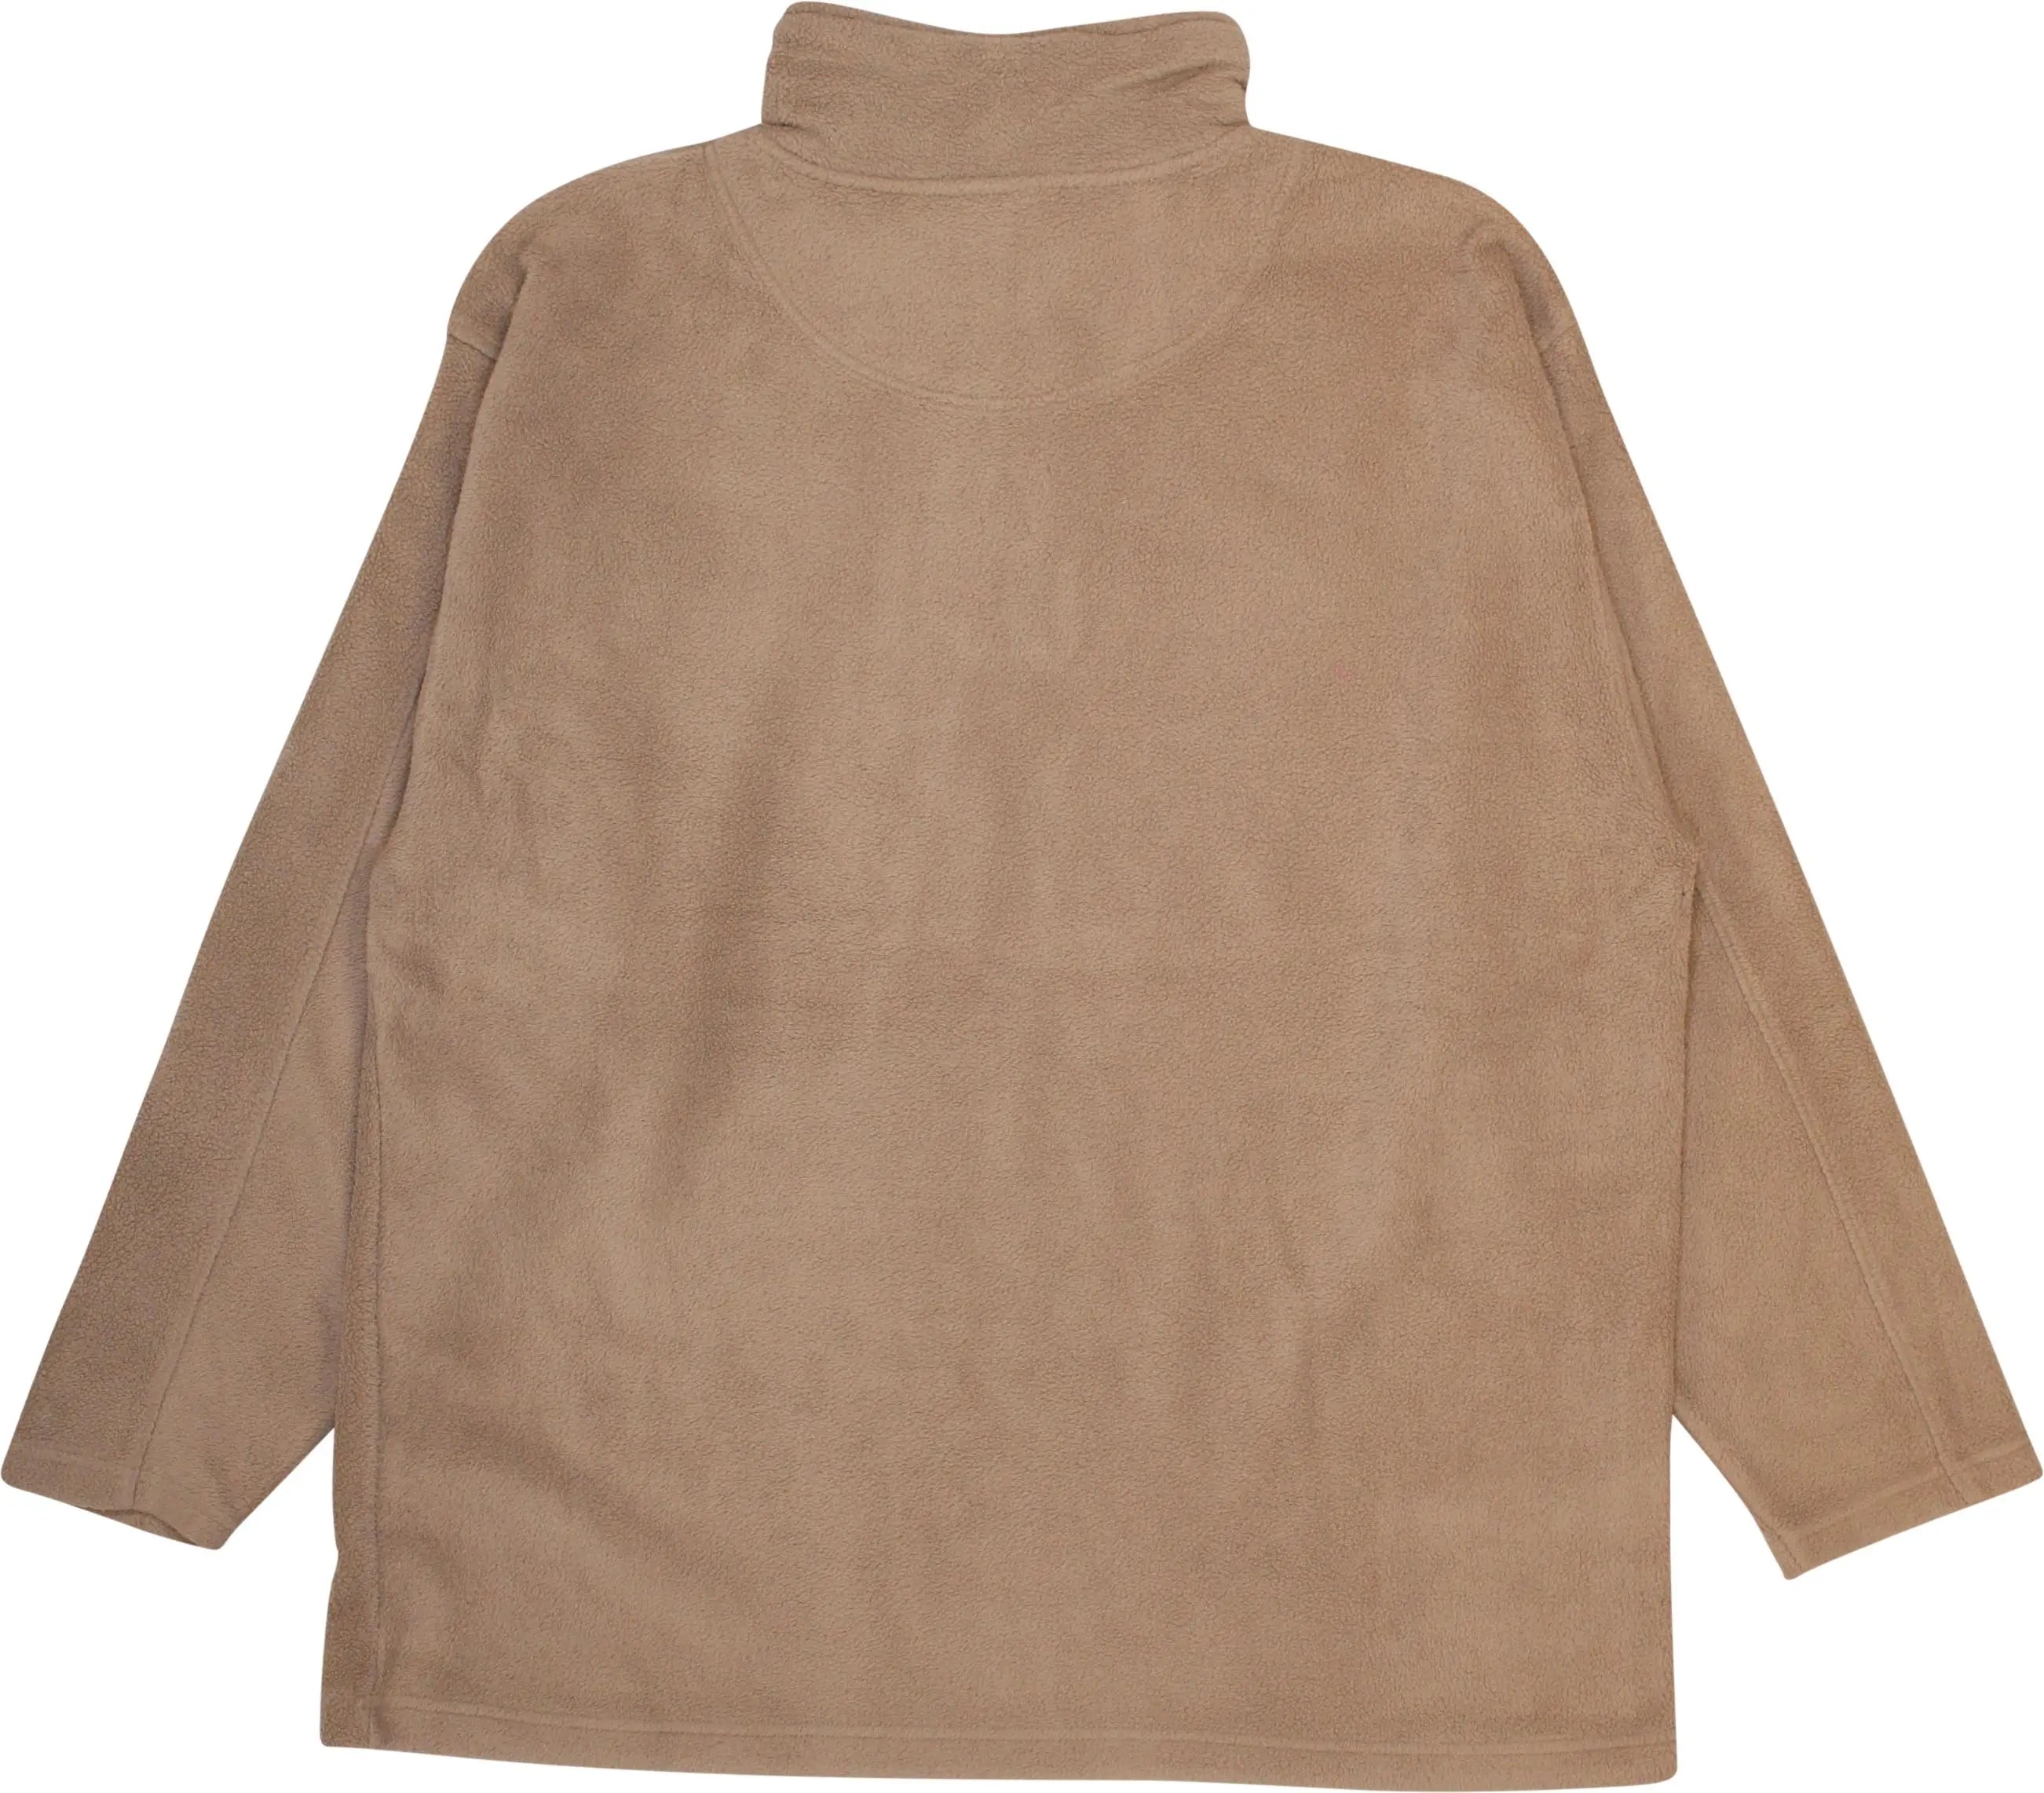 Out Door - Beige Fleece Jacket- ThriftTale.com - Vintage and second handclothing